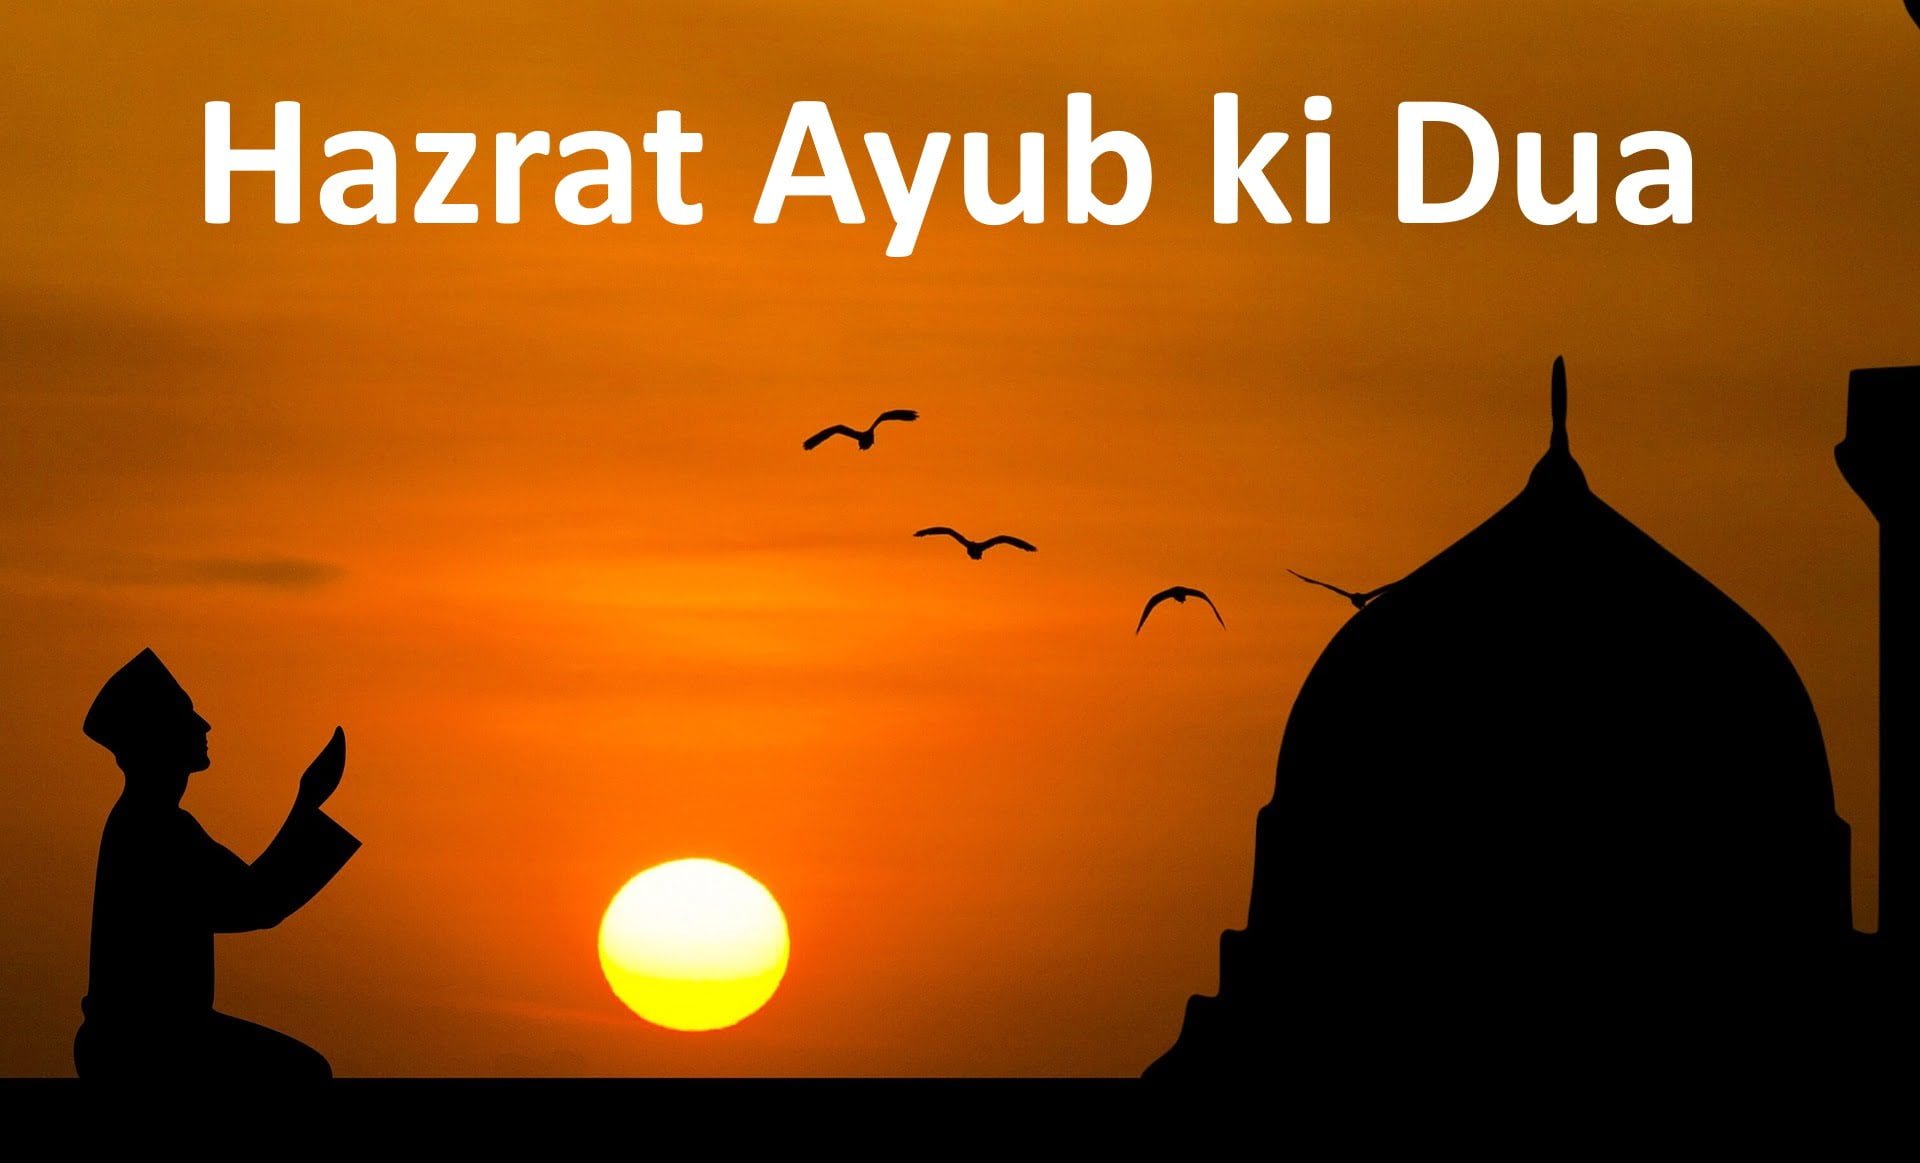 Dua of Hazrat Ayub with Urdu Translation - Hazrat Ayub ki Dua